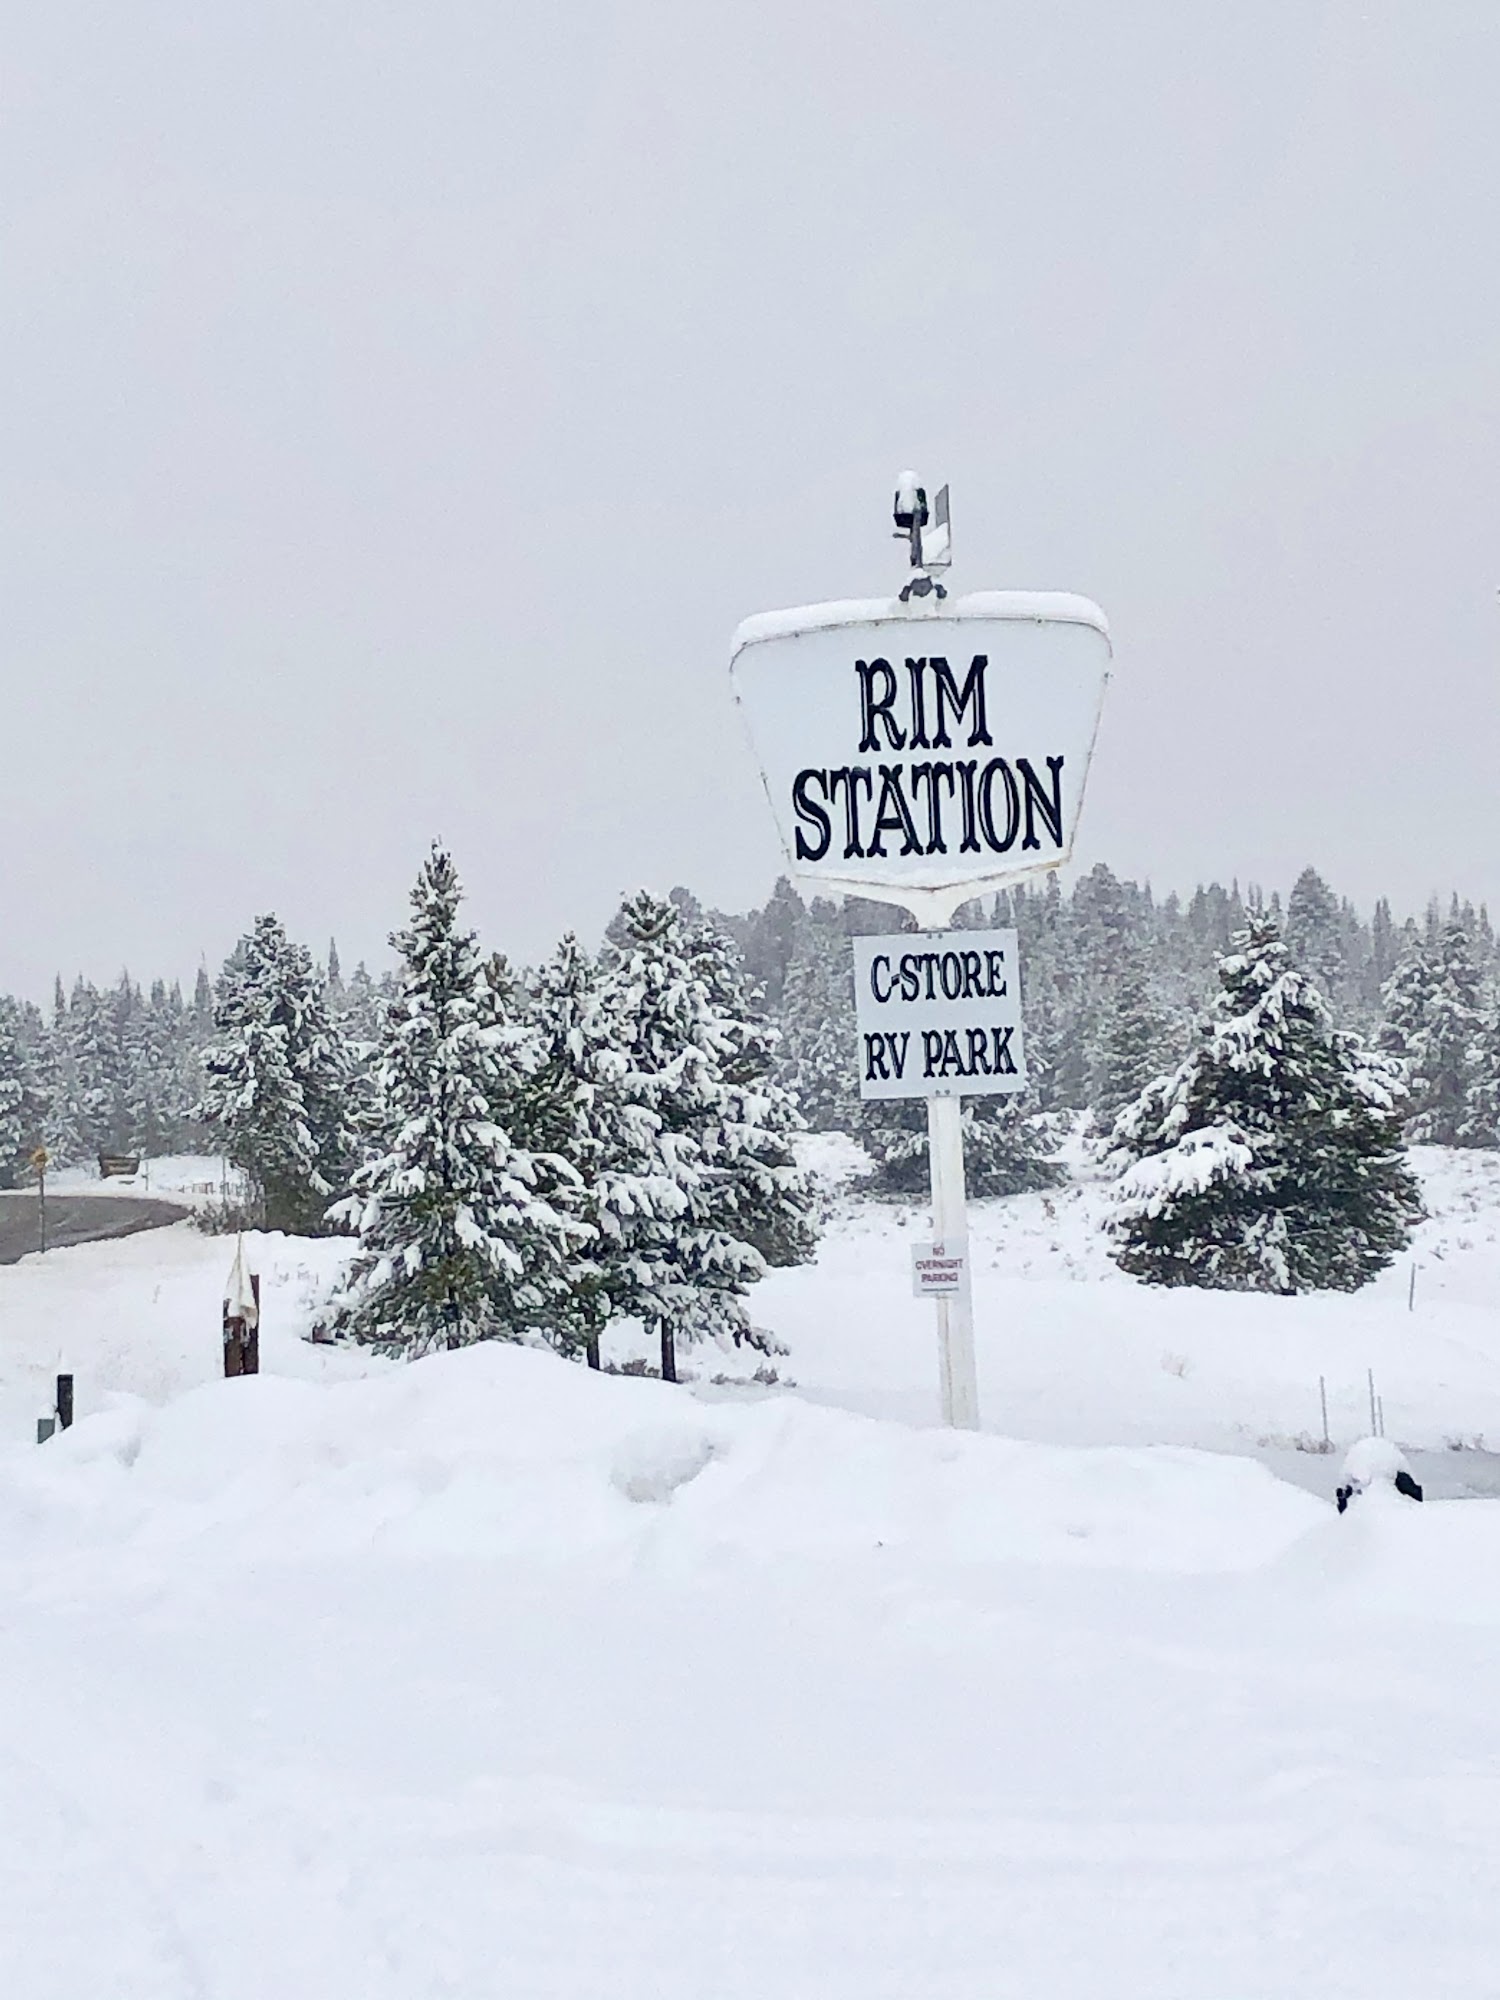 Rim Station 12930 US-191, Pinedale Wyoming 82941